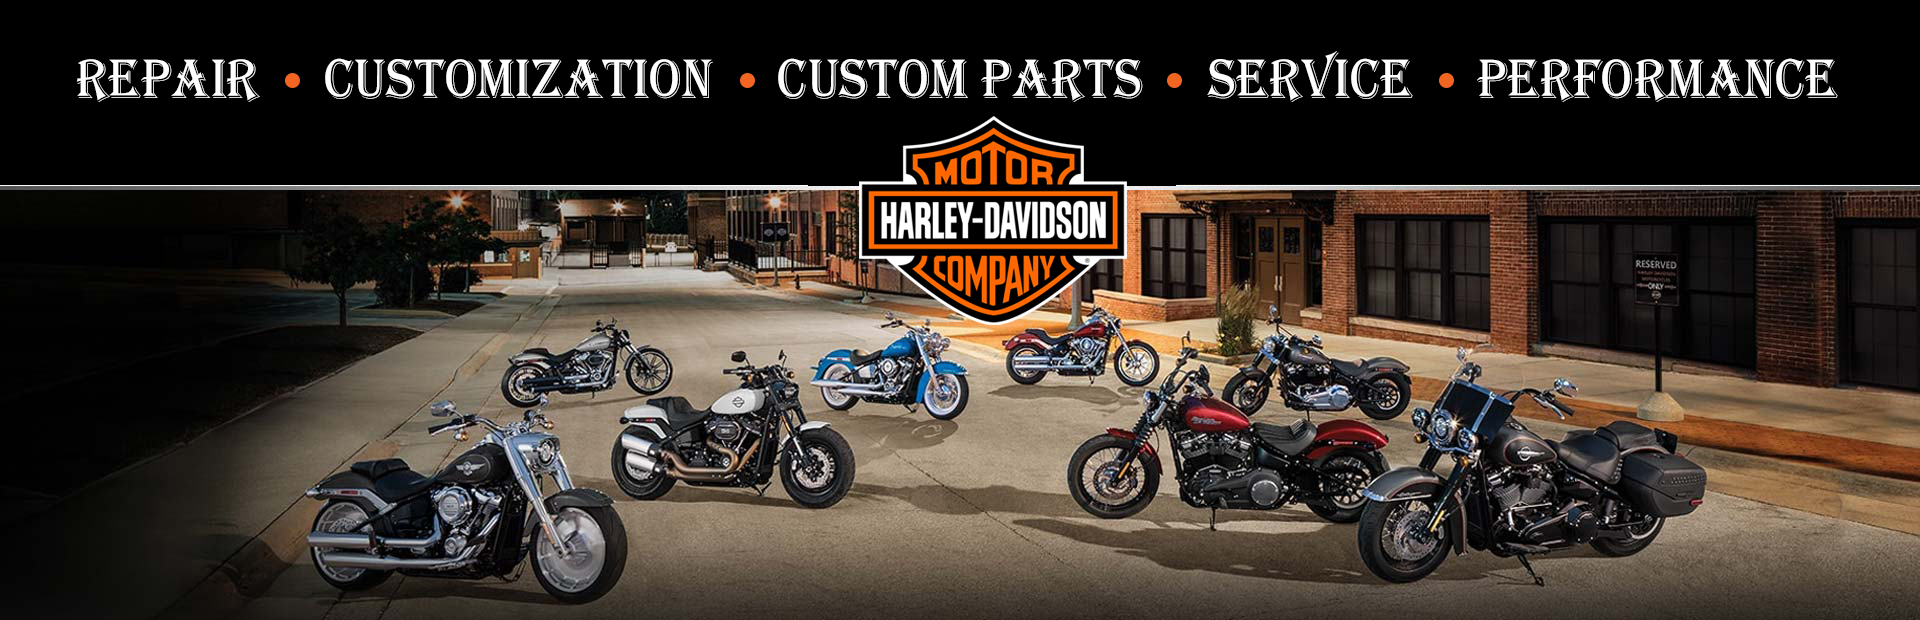 Harley Davidson Repair & Customization Shop